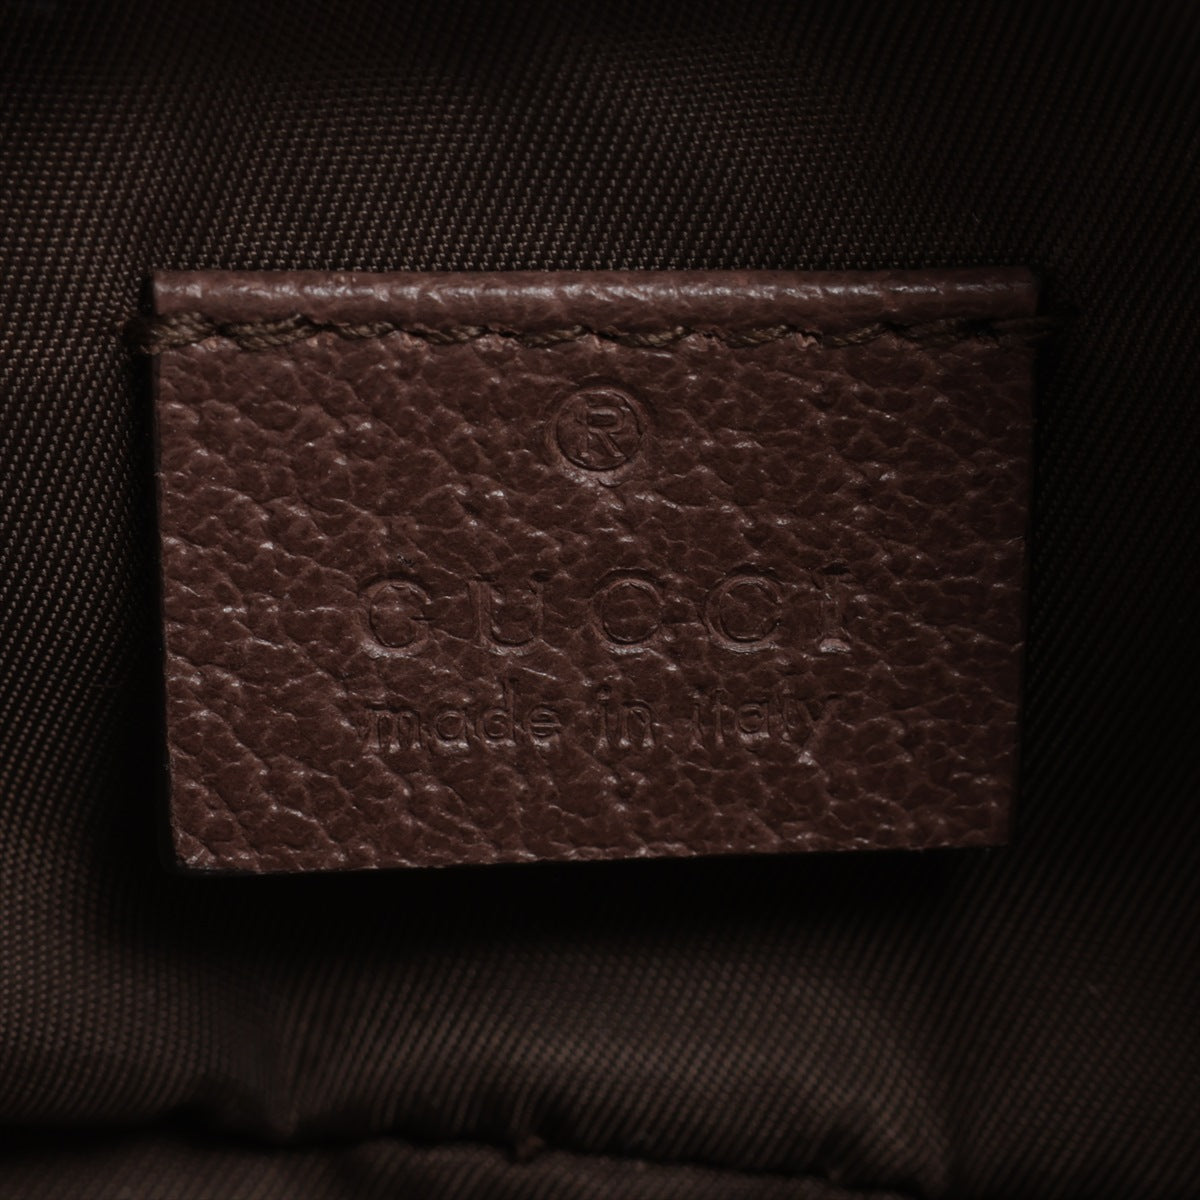 Gucci GG Supreme Ophidia 625707 PVC & leather Coin Purse Beige